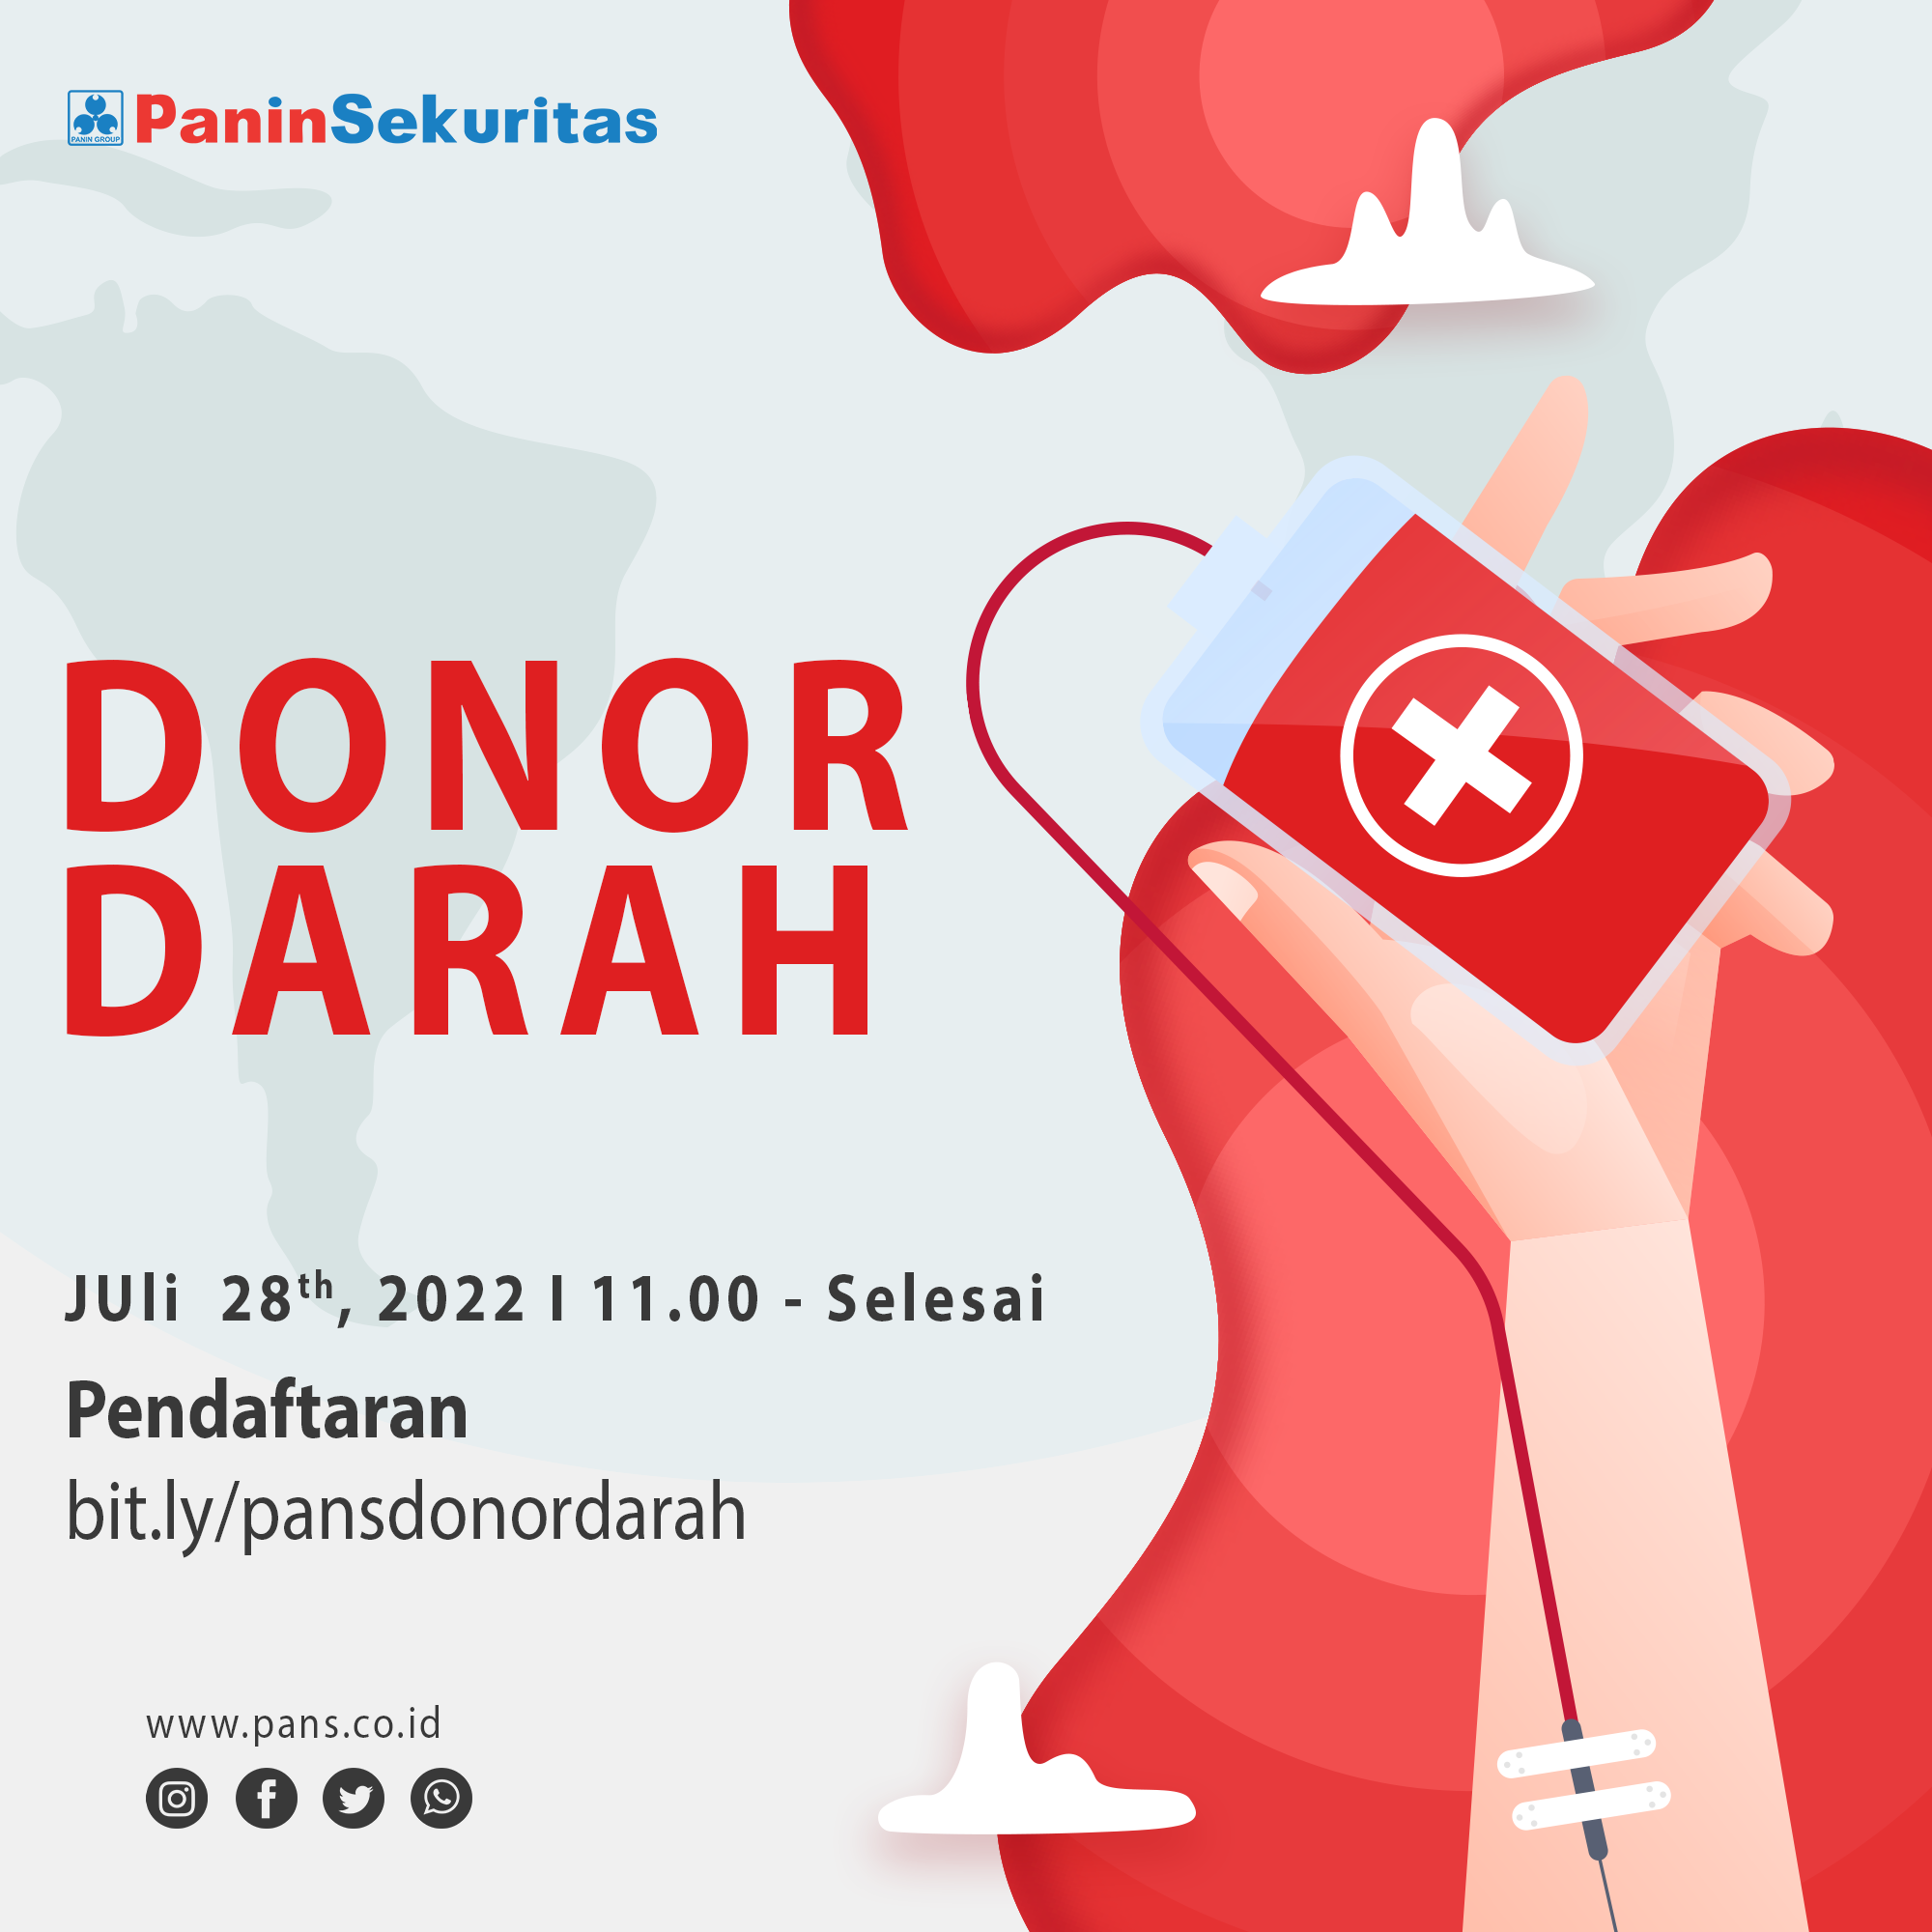 Corporate Social Responsibility - Donor Darah Panin Sekuritas